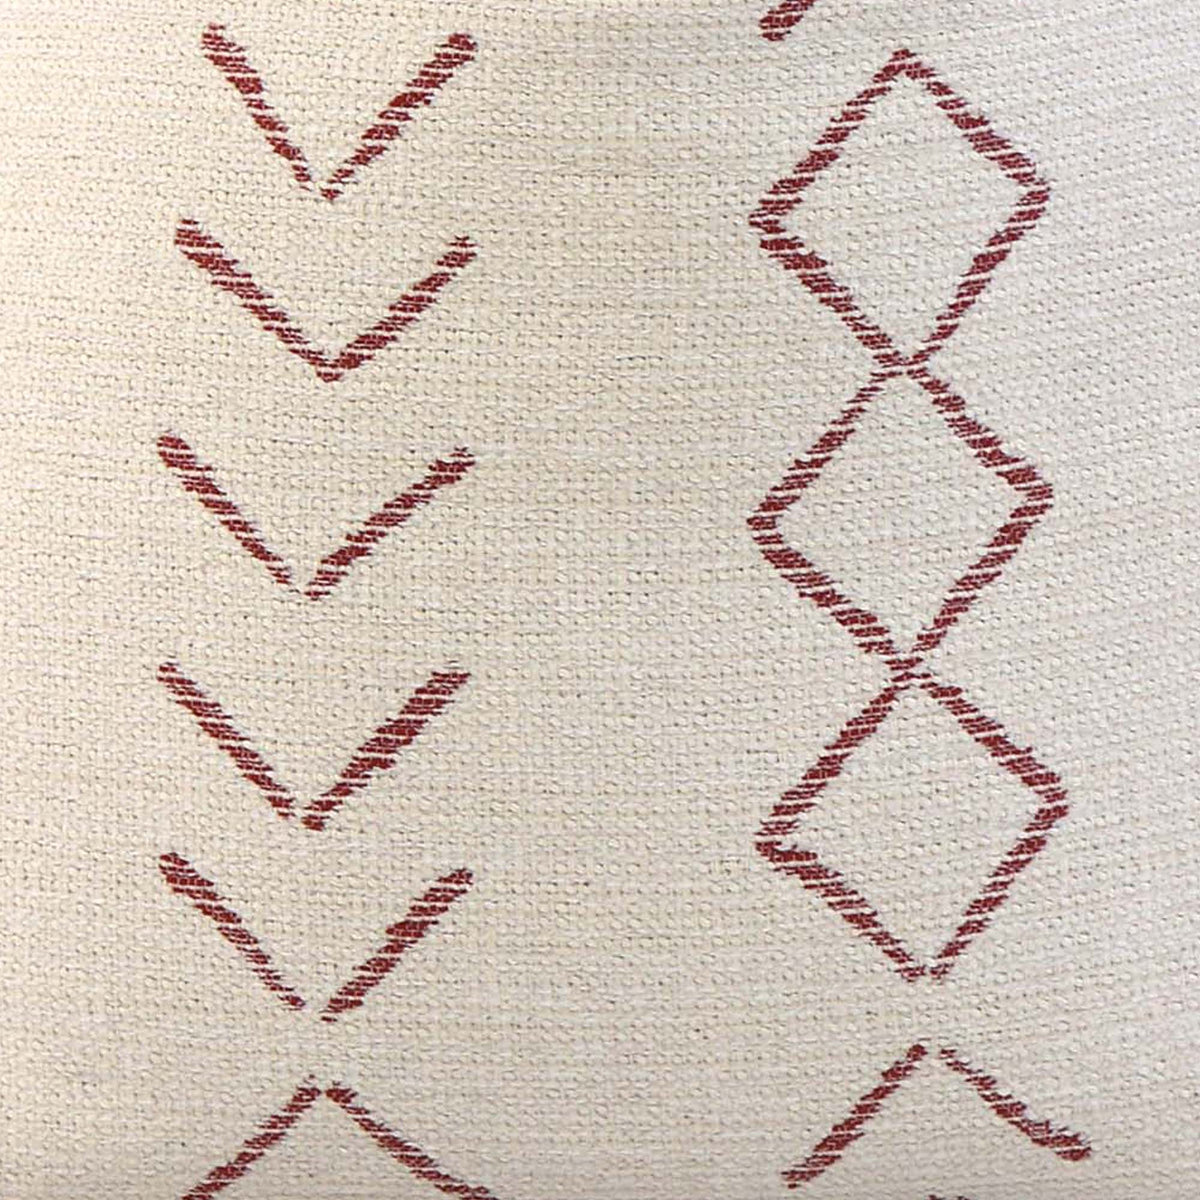 Anasazi Performance Canyon / 4x4 inch Fabric Swatch